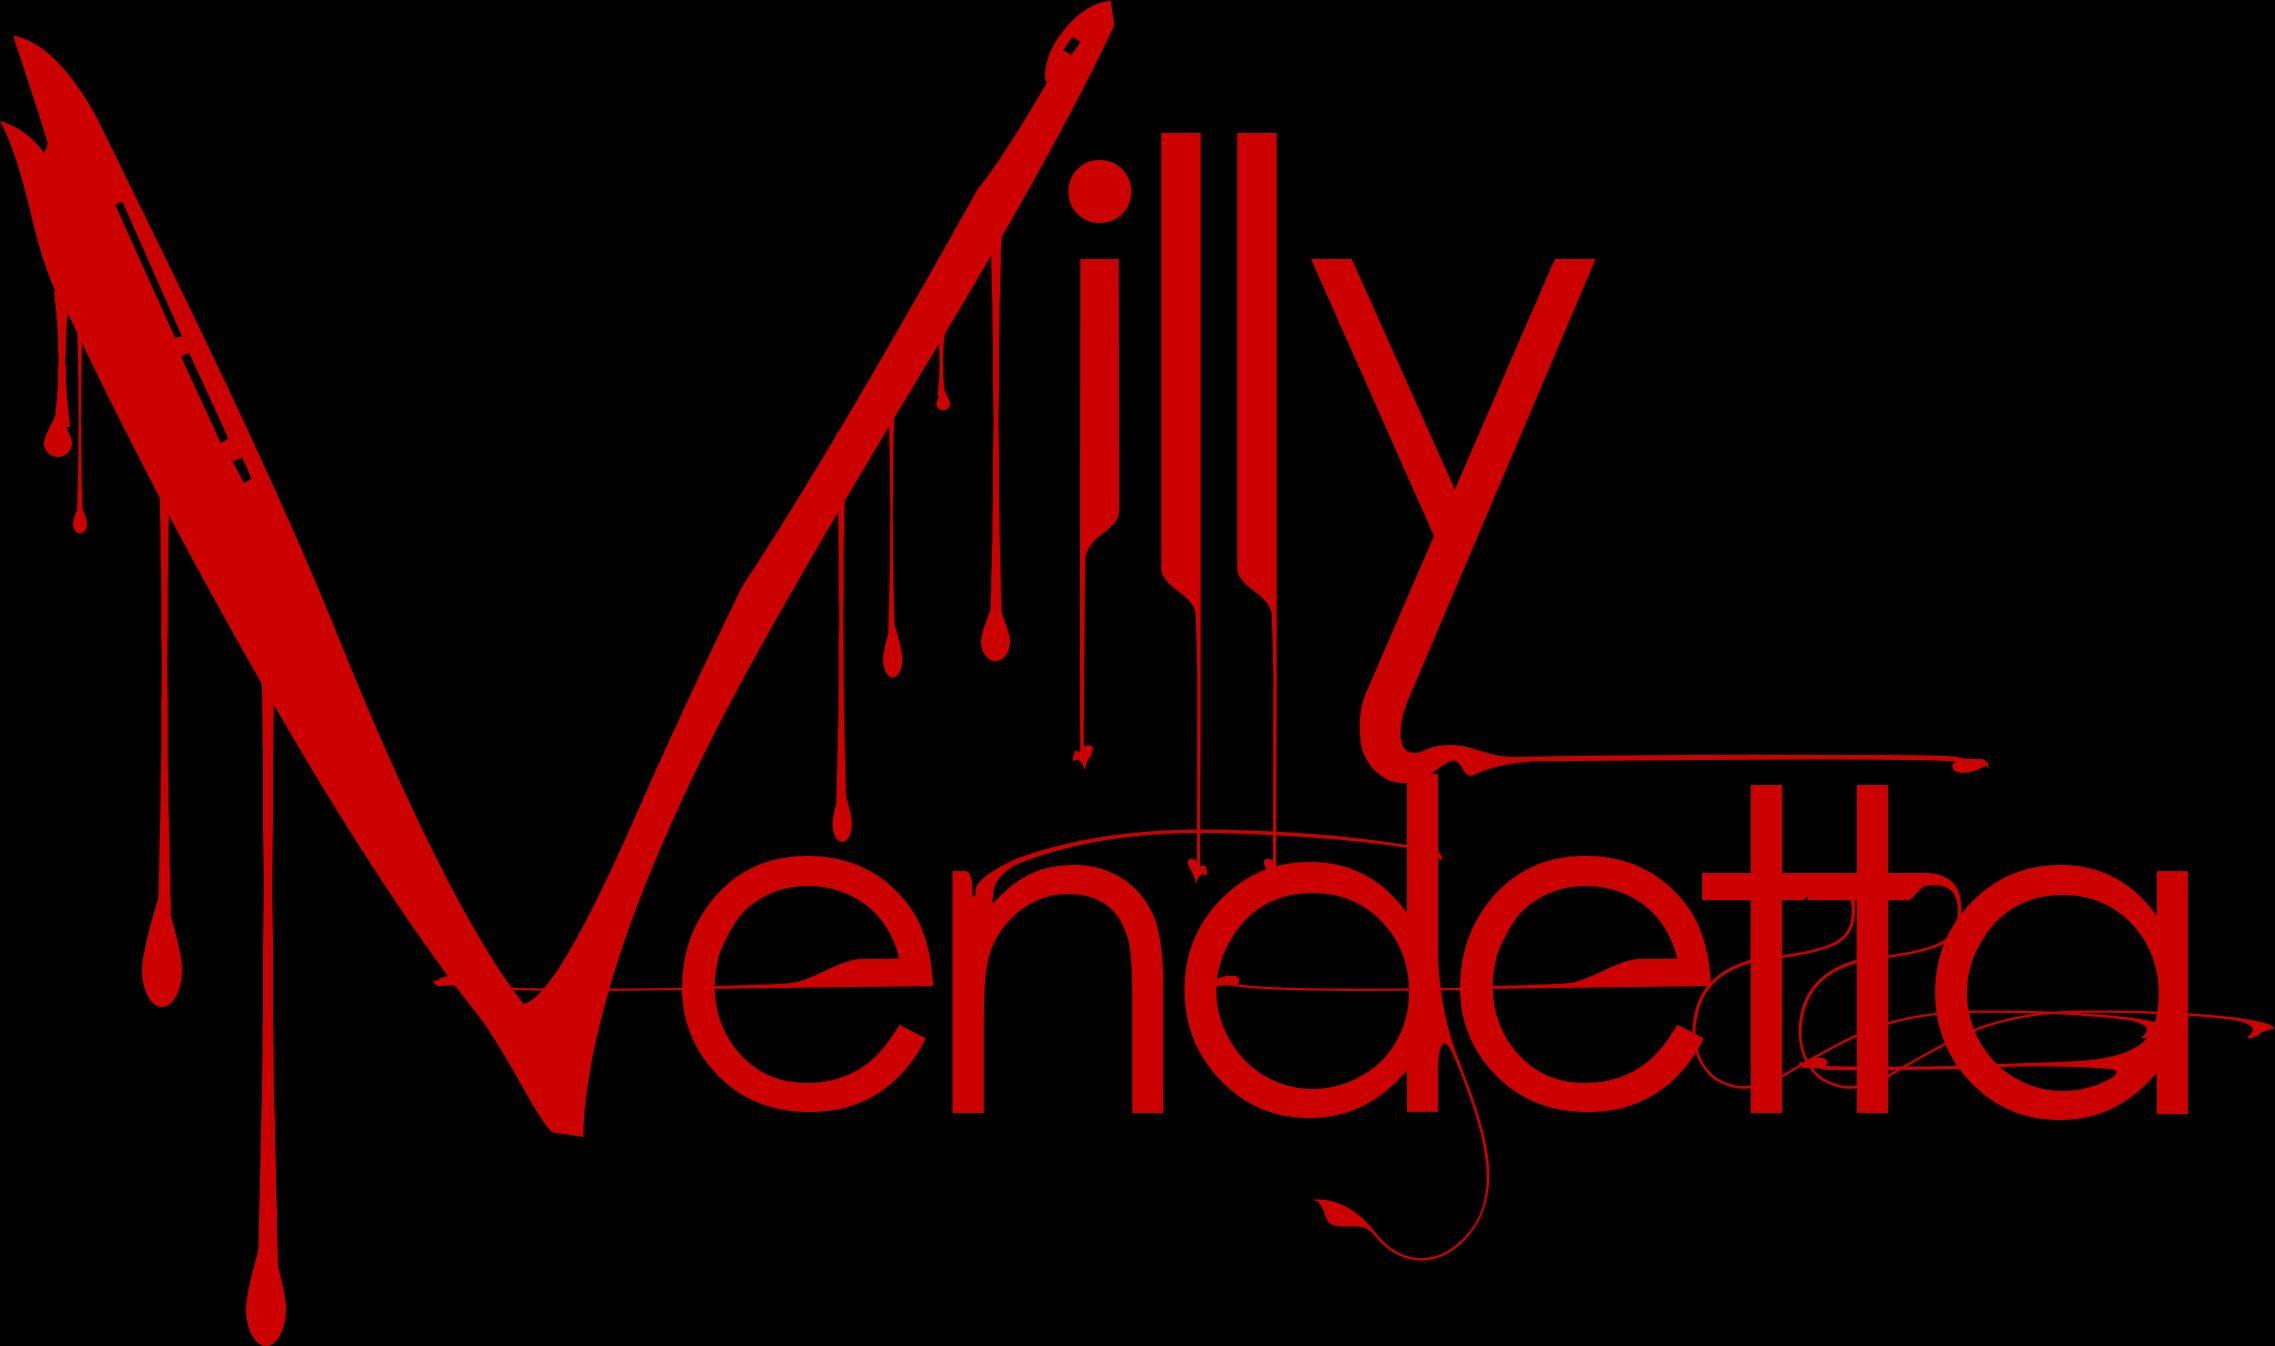 Red Circle Entertainment Logo - Villy Vendetta Logo Design. Circle Entertainment, LLC